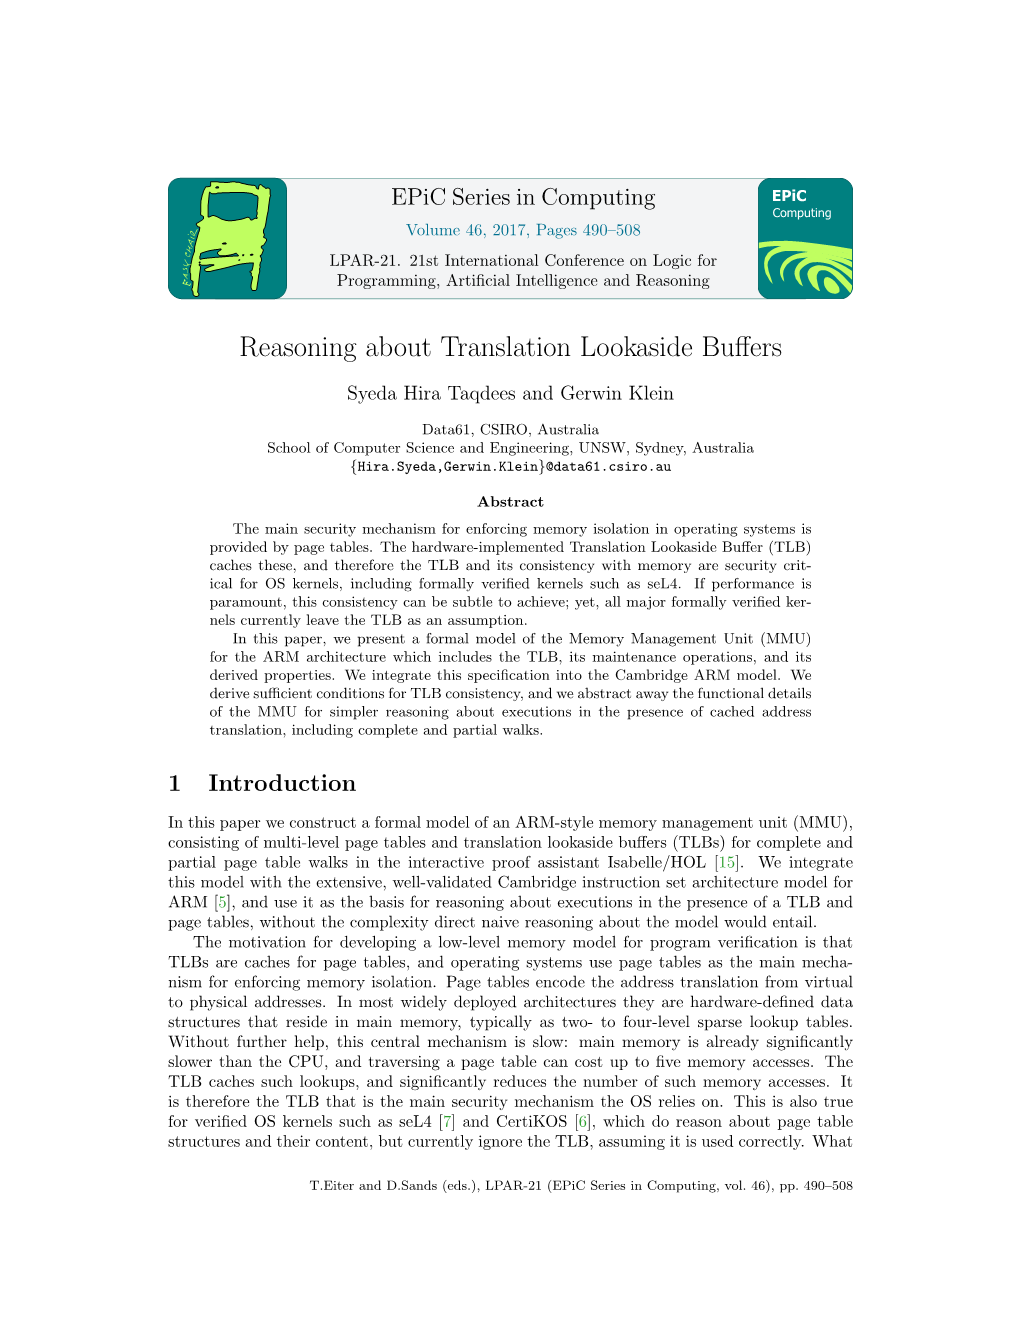 Reasoning About Translation Lookaside Buffers